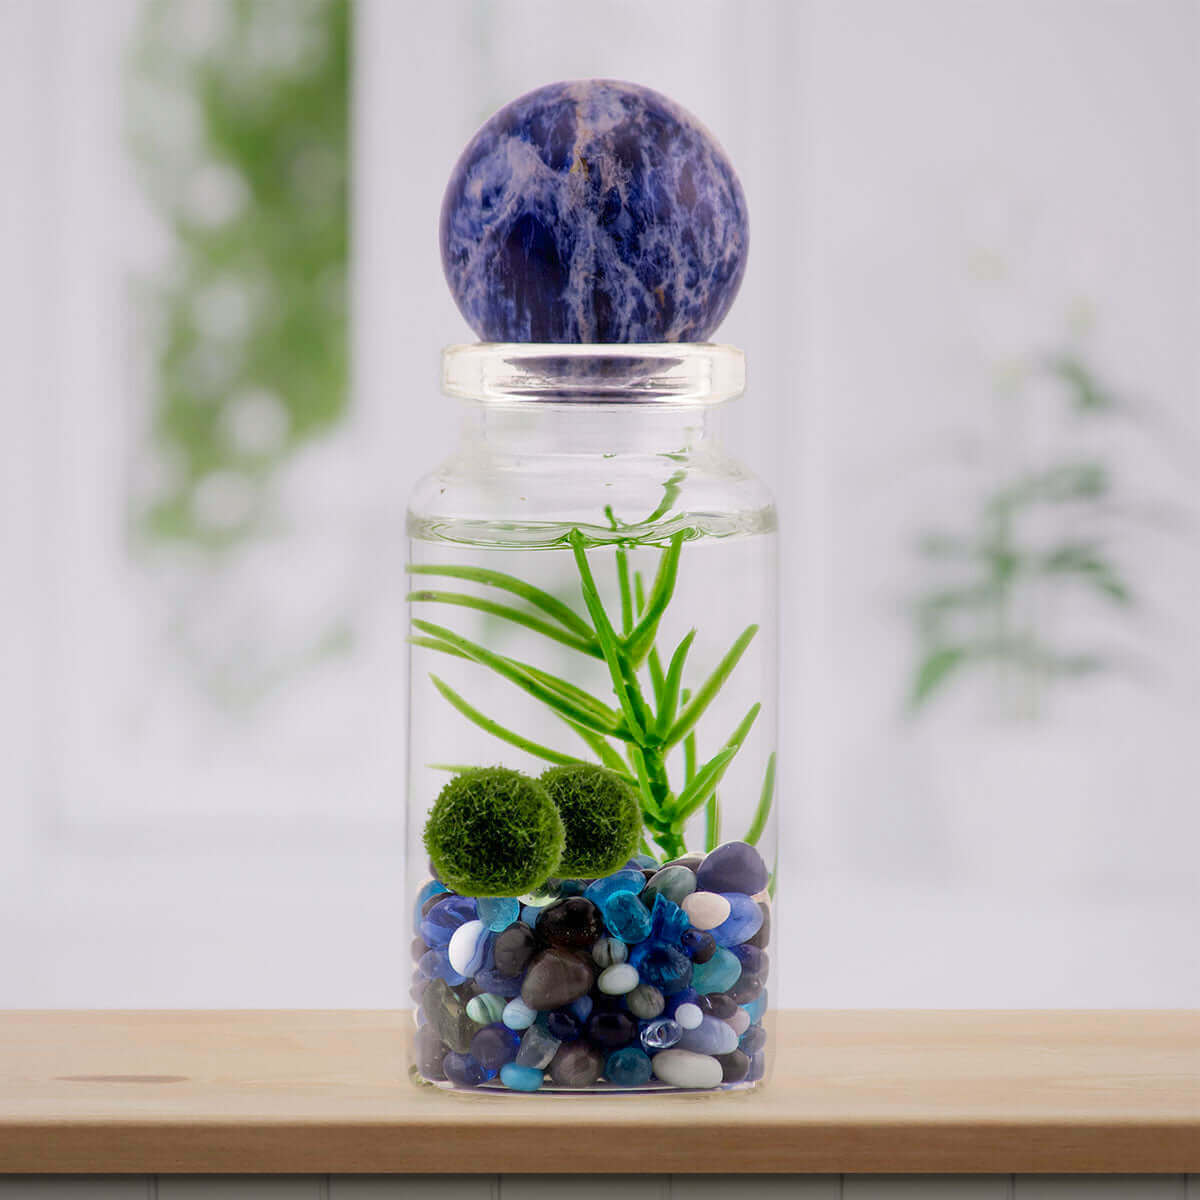 Blue Sodalite sphere enhancing a moss ball terrarium with its deep blue hues.